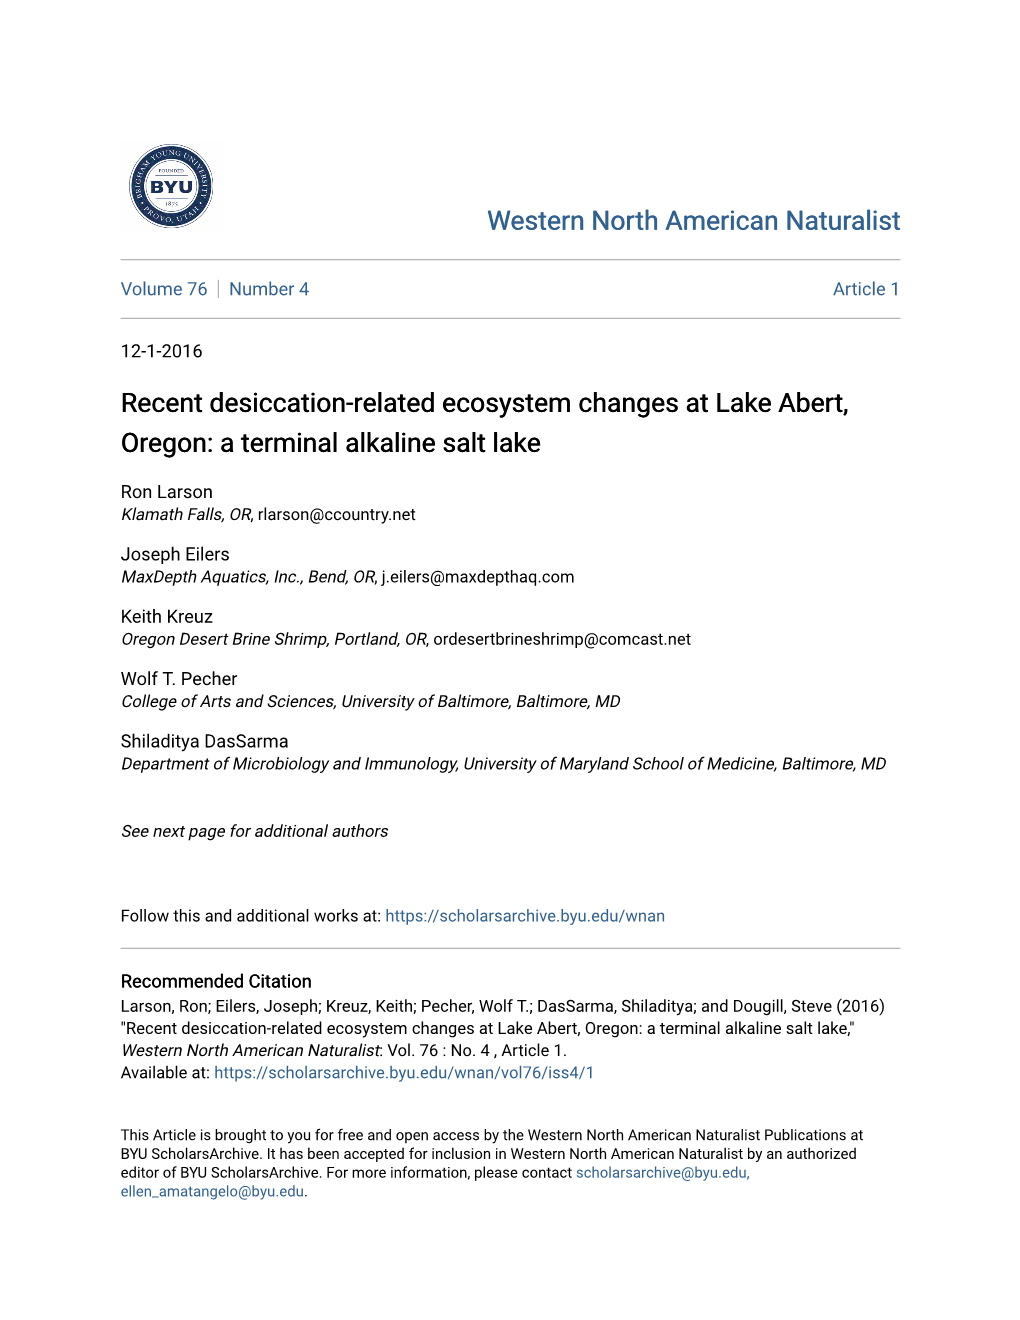 Recent Desiccation-Related Ecosystem Changes at Lake Abert, Oregon: a Terminal Alkaline Salt Lake